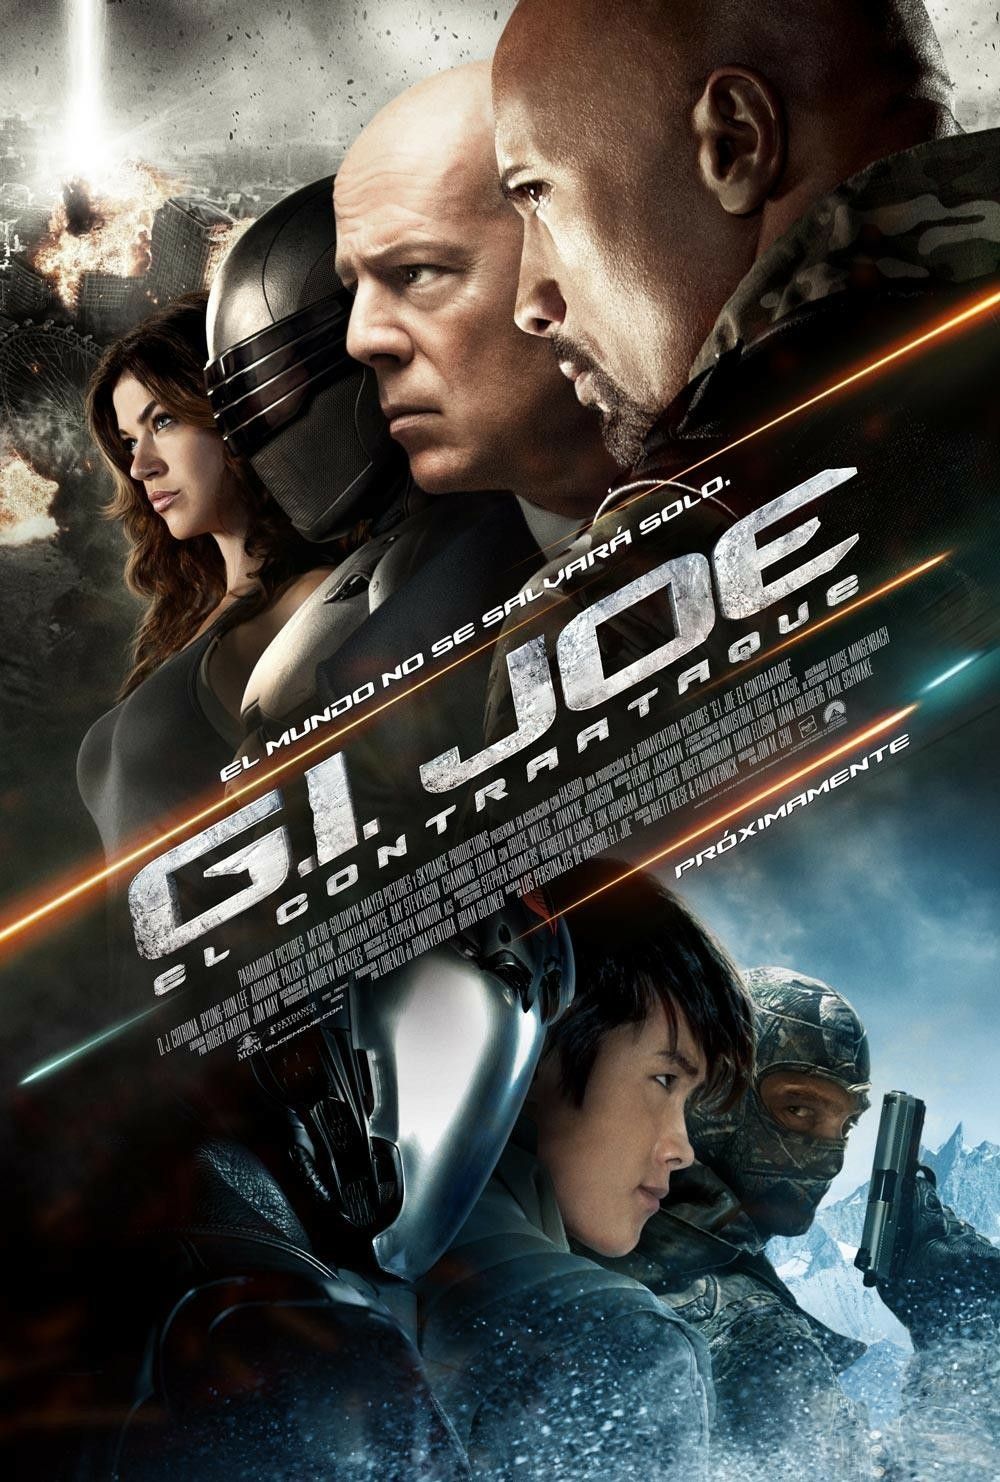 Gi Joe 2 Retaliation 2013 Movie 720p Torrent Download